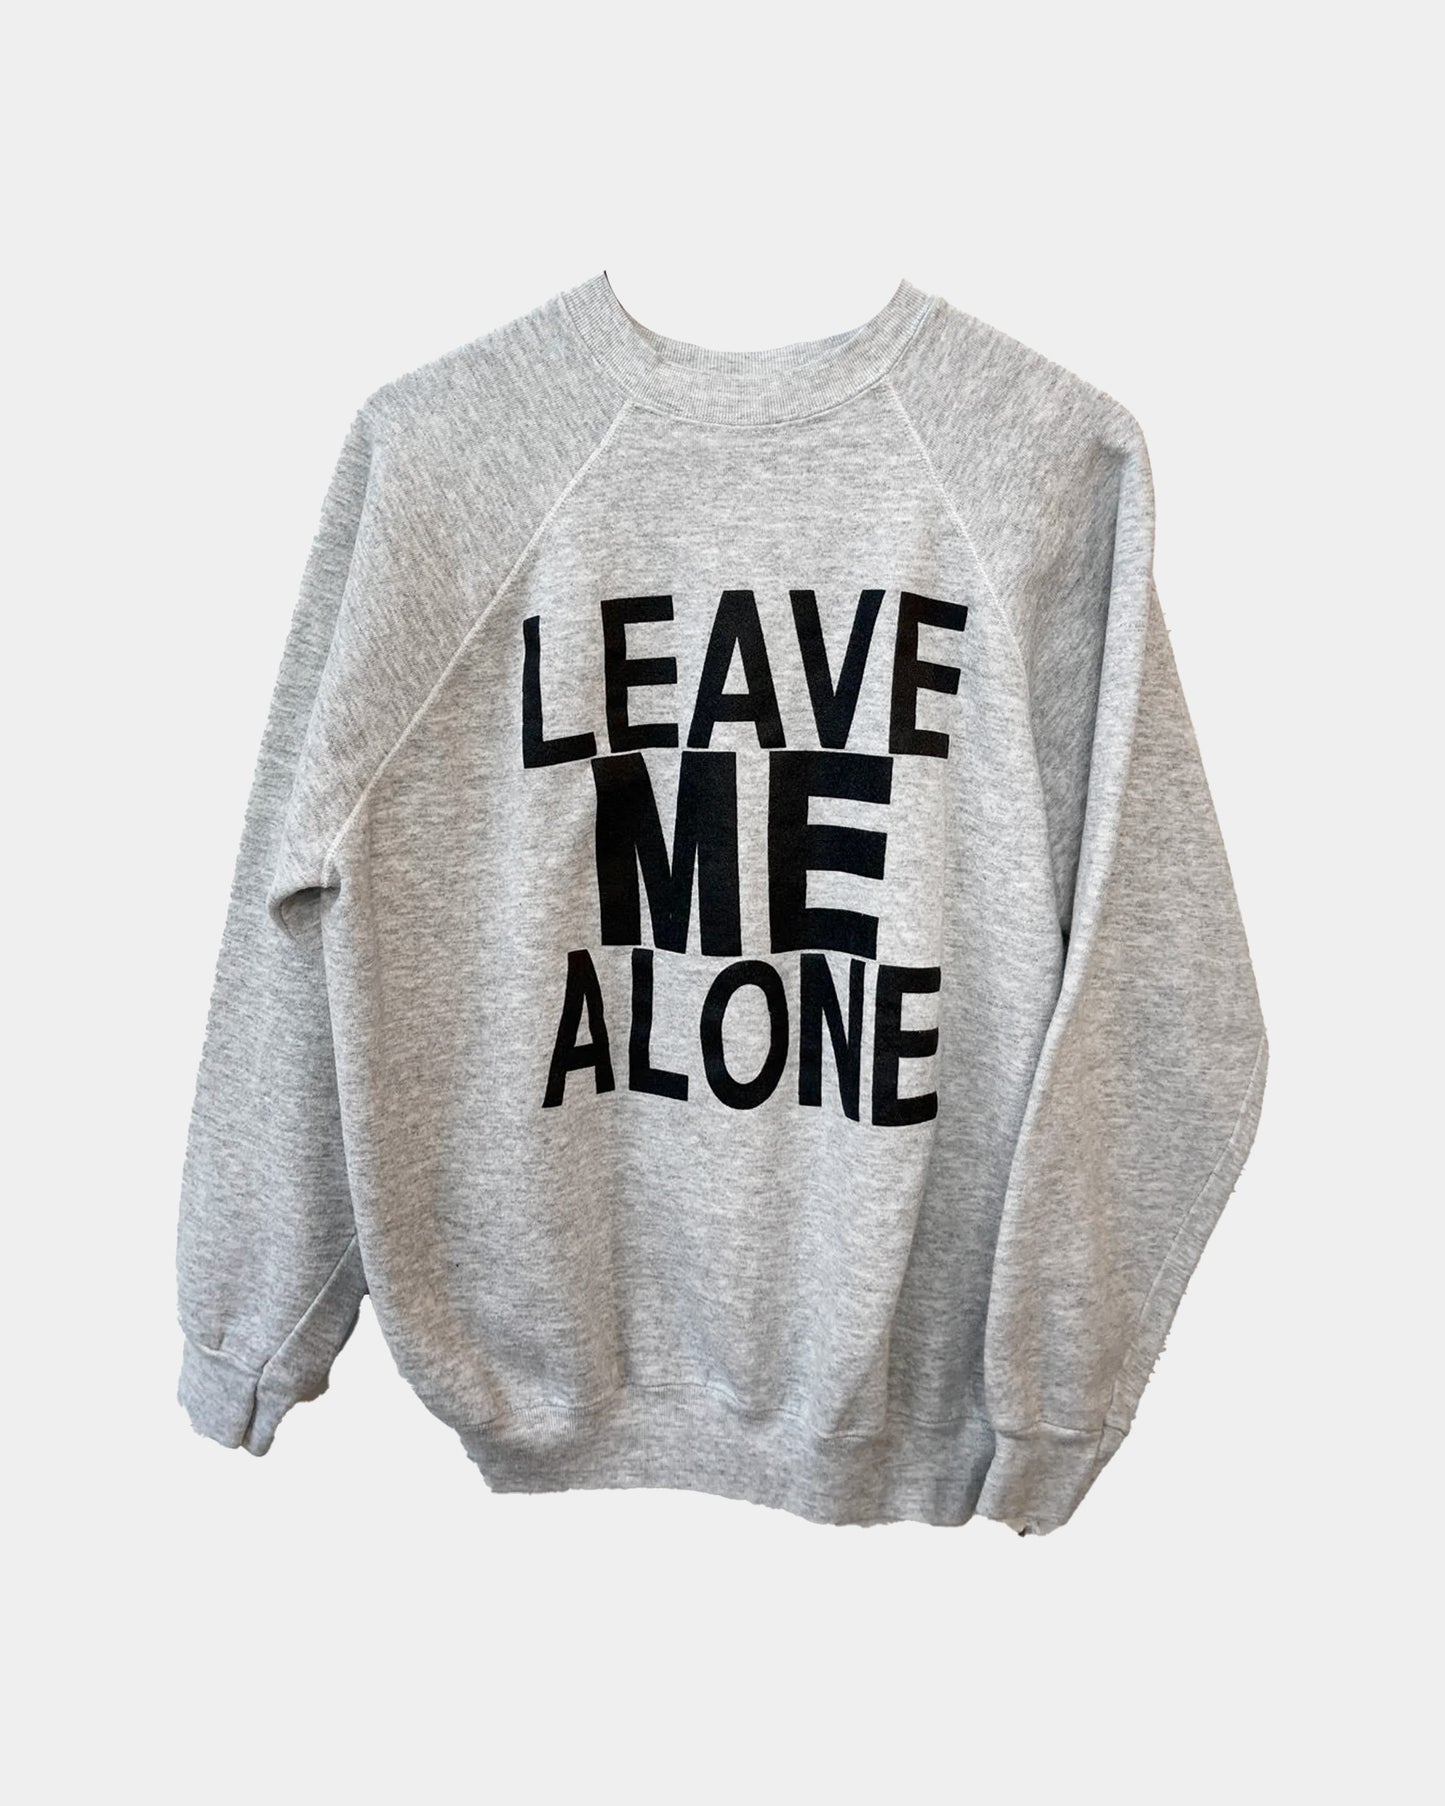 Vintage LEAVE ME ALONE Sweater Pullover Sweatshirt XL